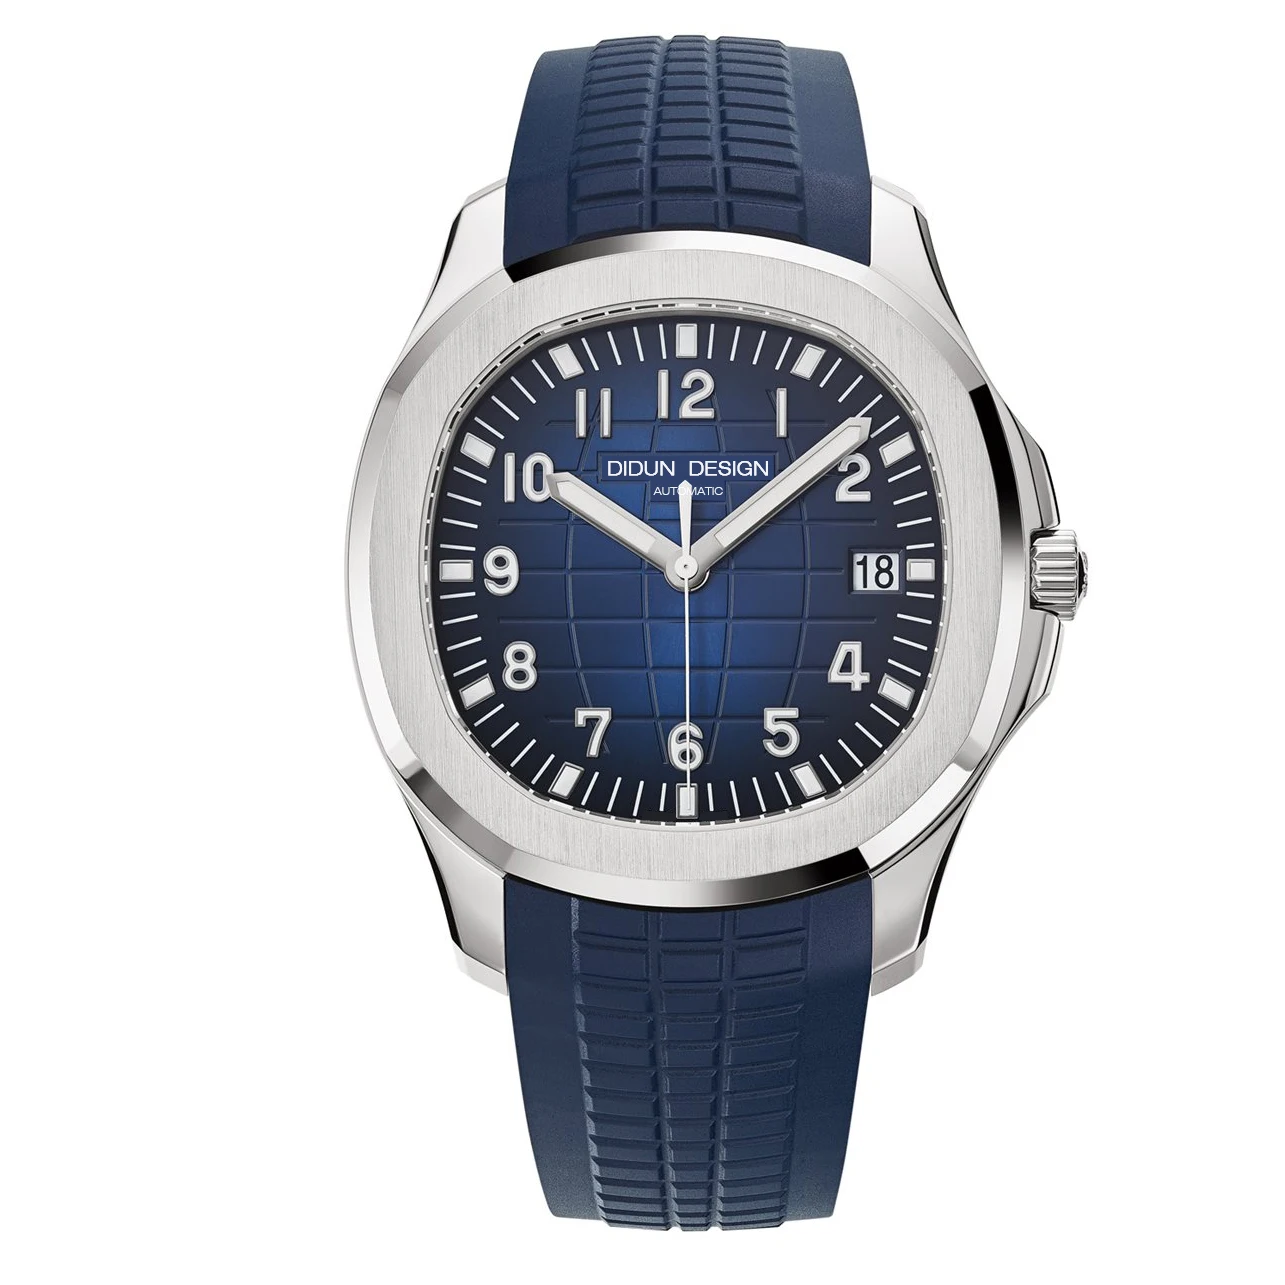 

DIDUN NEW Mens Watches Top Brand Luxury Sports Watch Male Military JAPAN Quartz Chronograph Analog Date Clock Steel Wristwatch